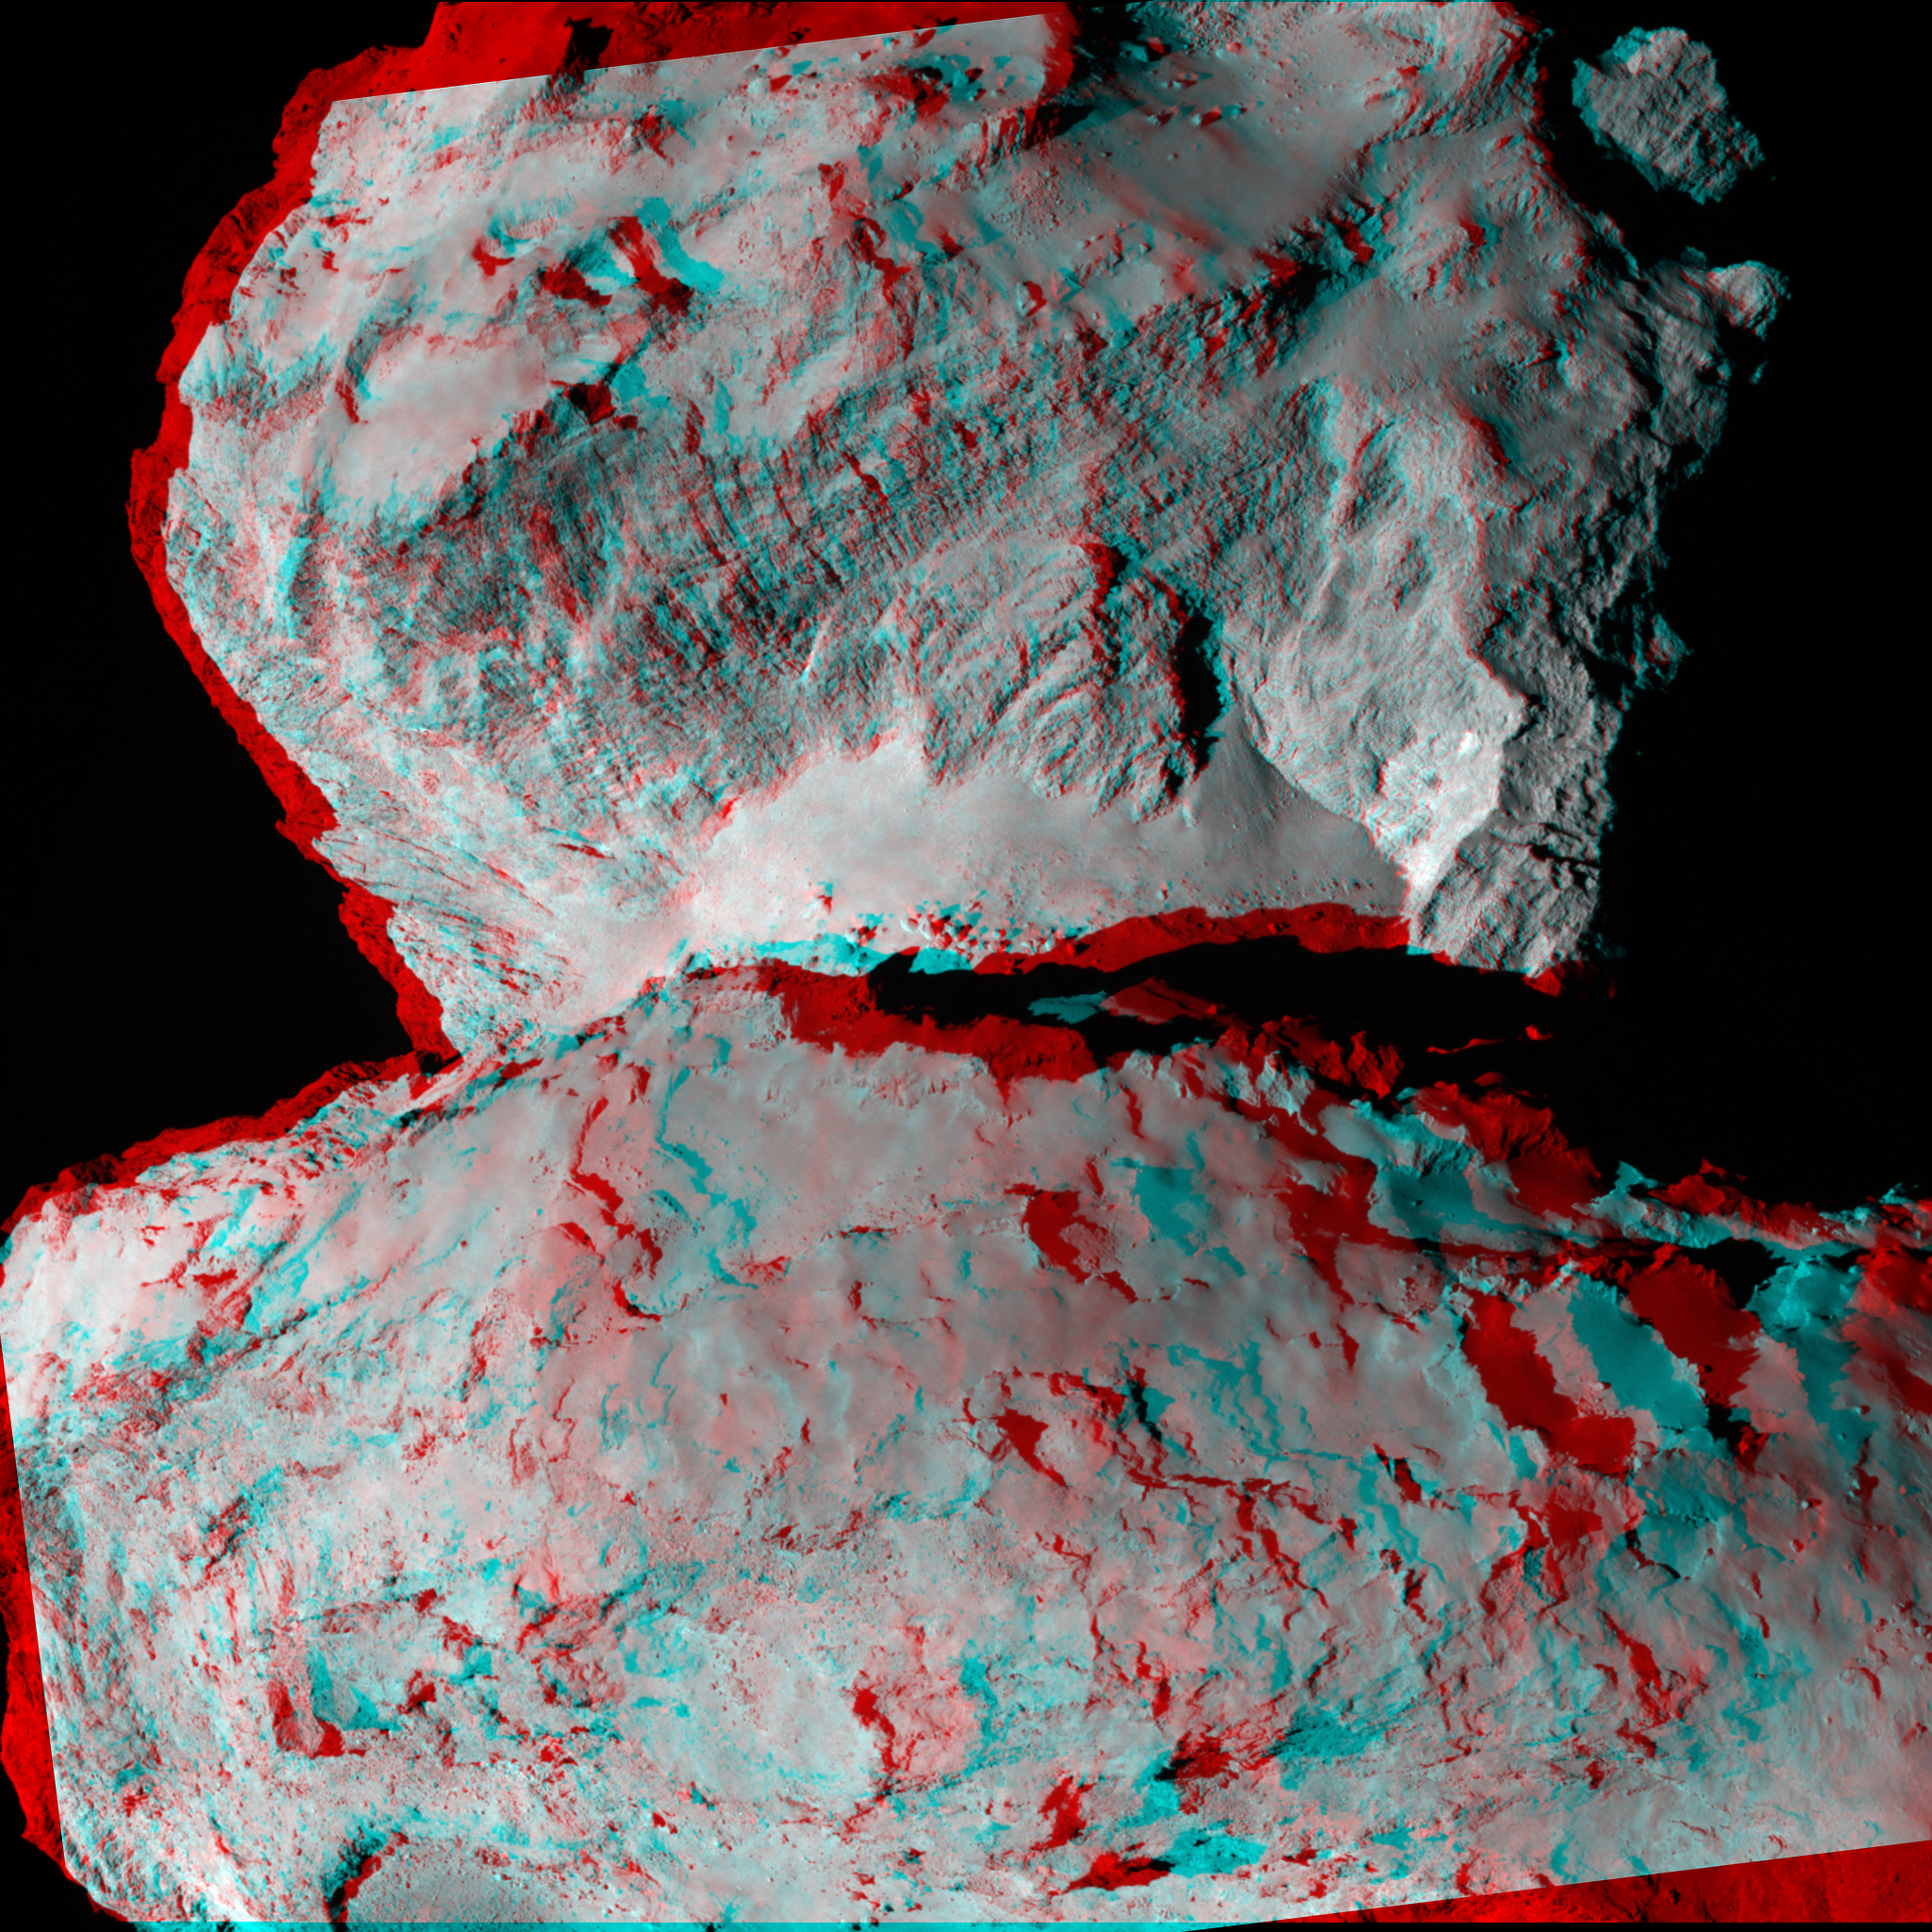 Rosetta_s_comet_in_3D